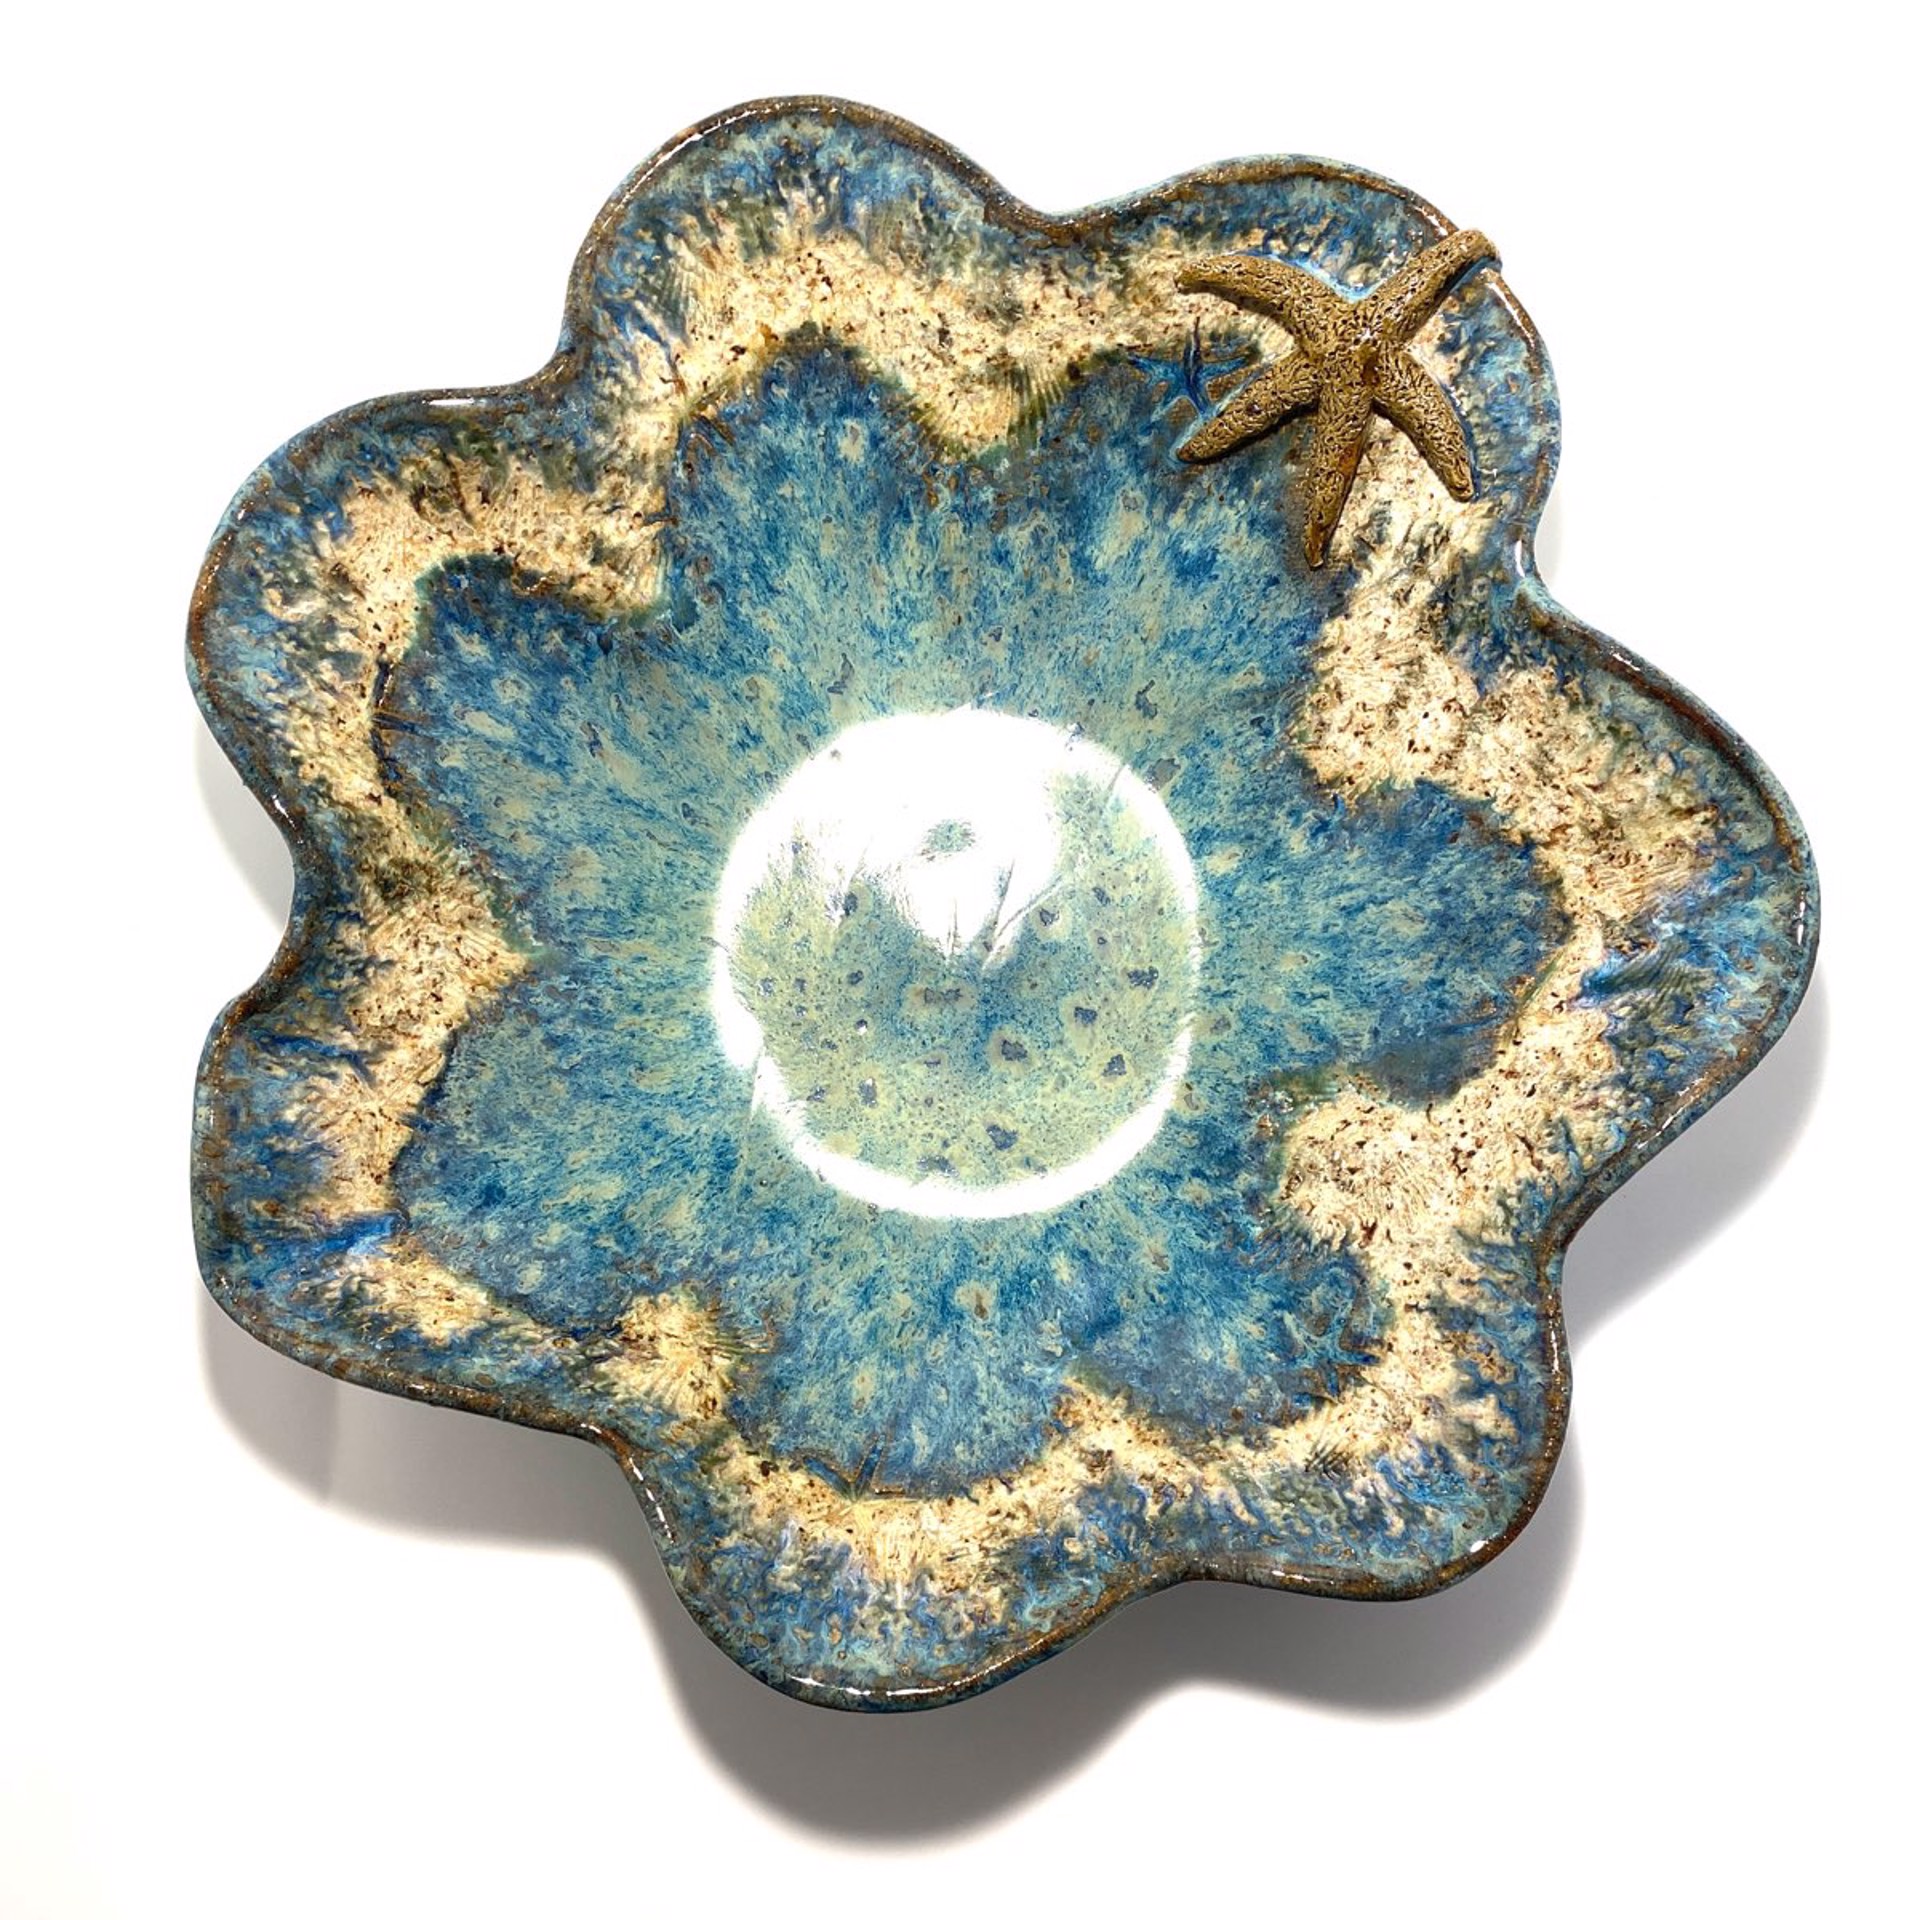 Large Bowl with One Starfish (Blue Glaze) LG23-1121 by Jim & Steffi Logan